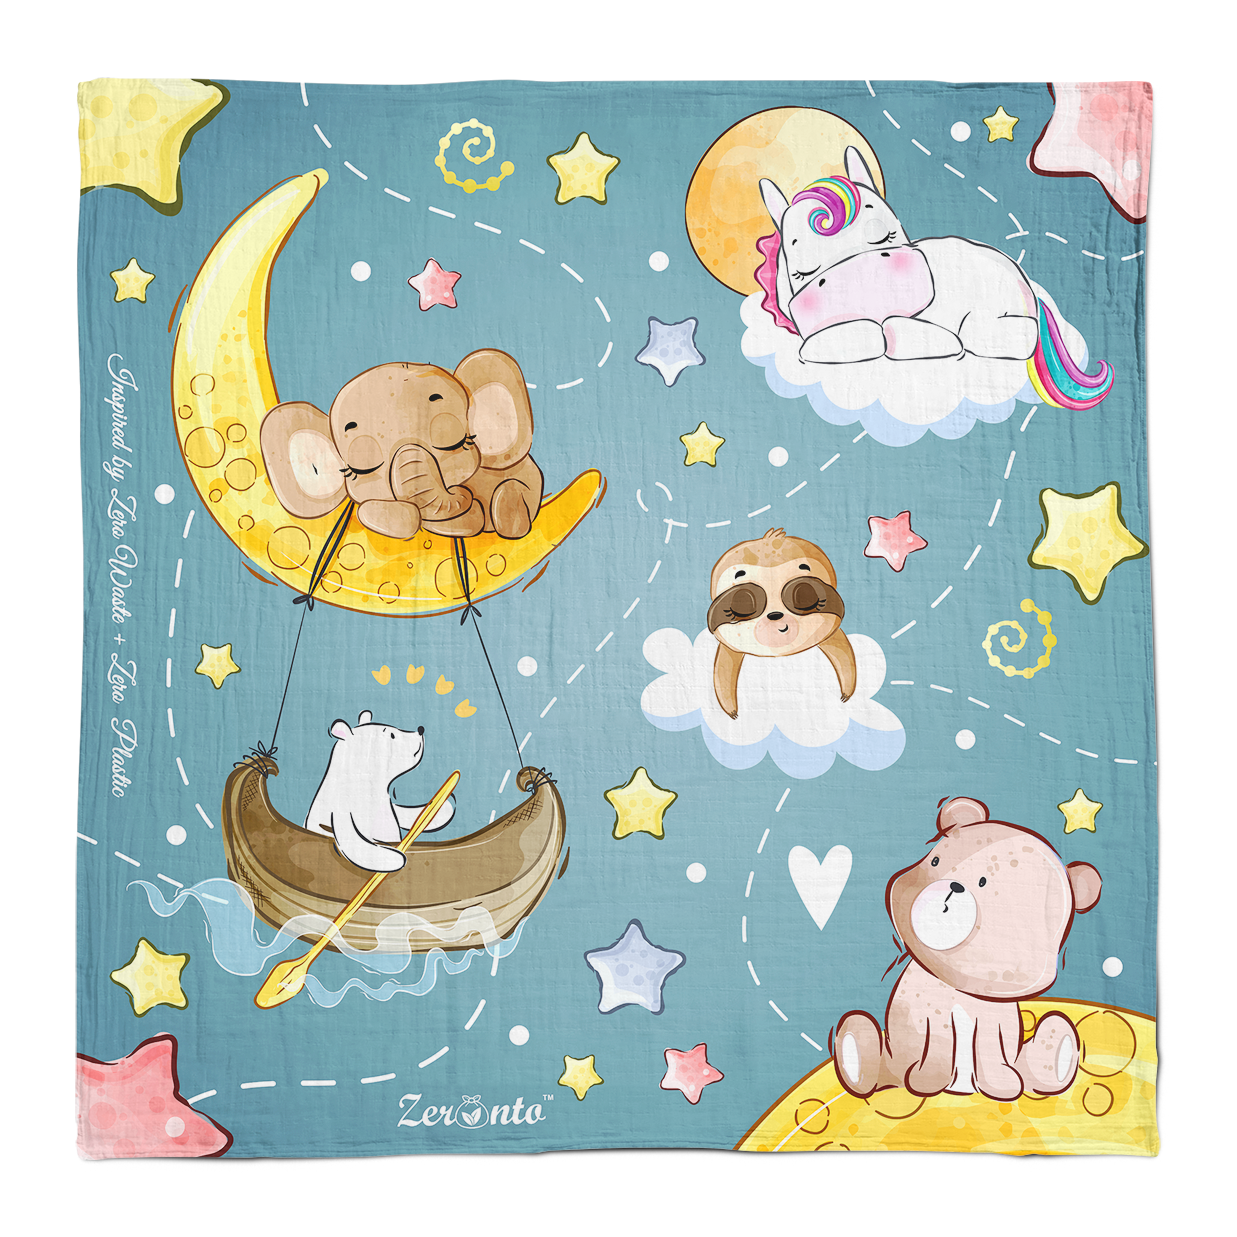 Ecolysium Medium Cotton Furoshiki Cloth Wrapper - Moon & Star Lullaby (72 x 72 cm)